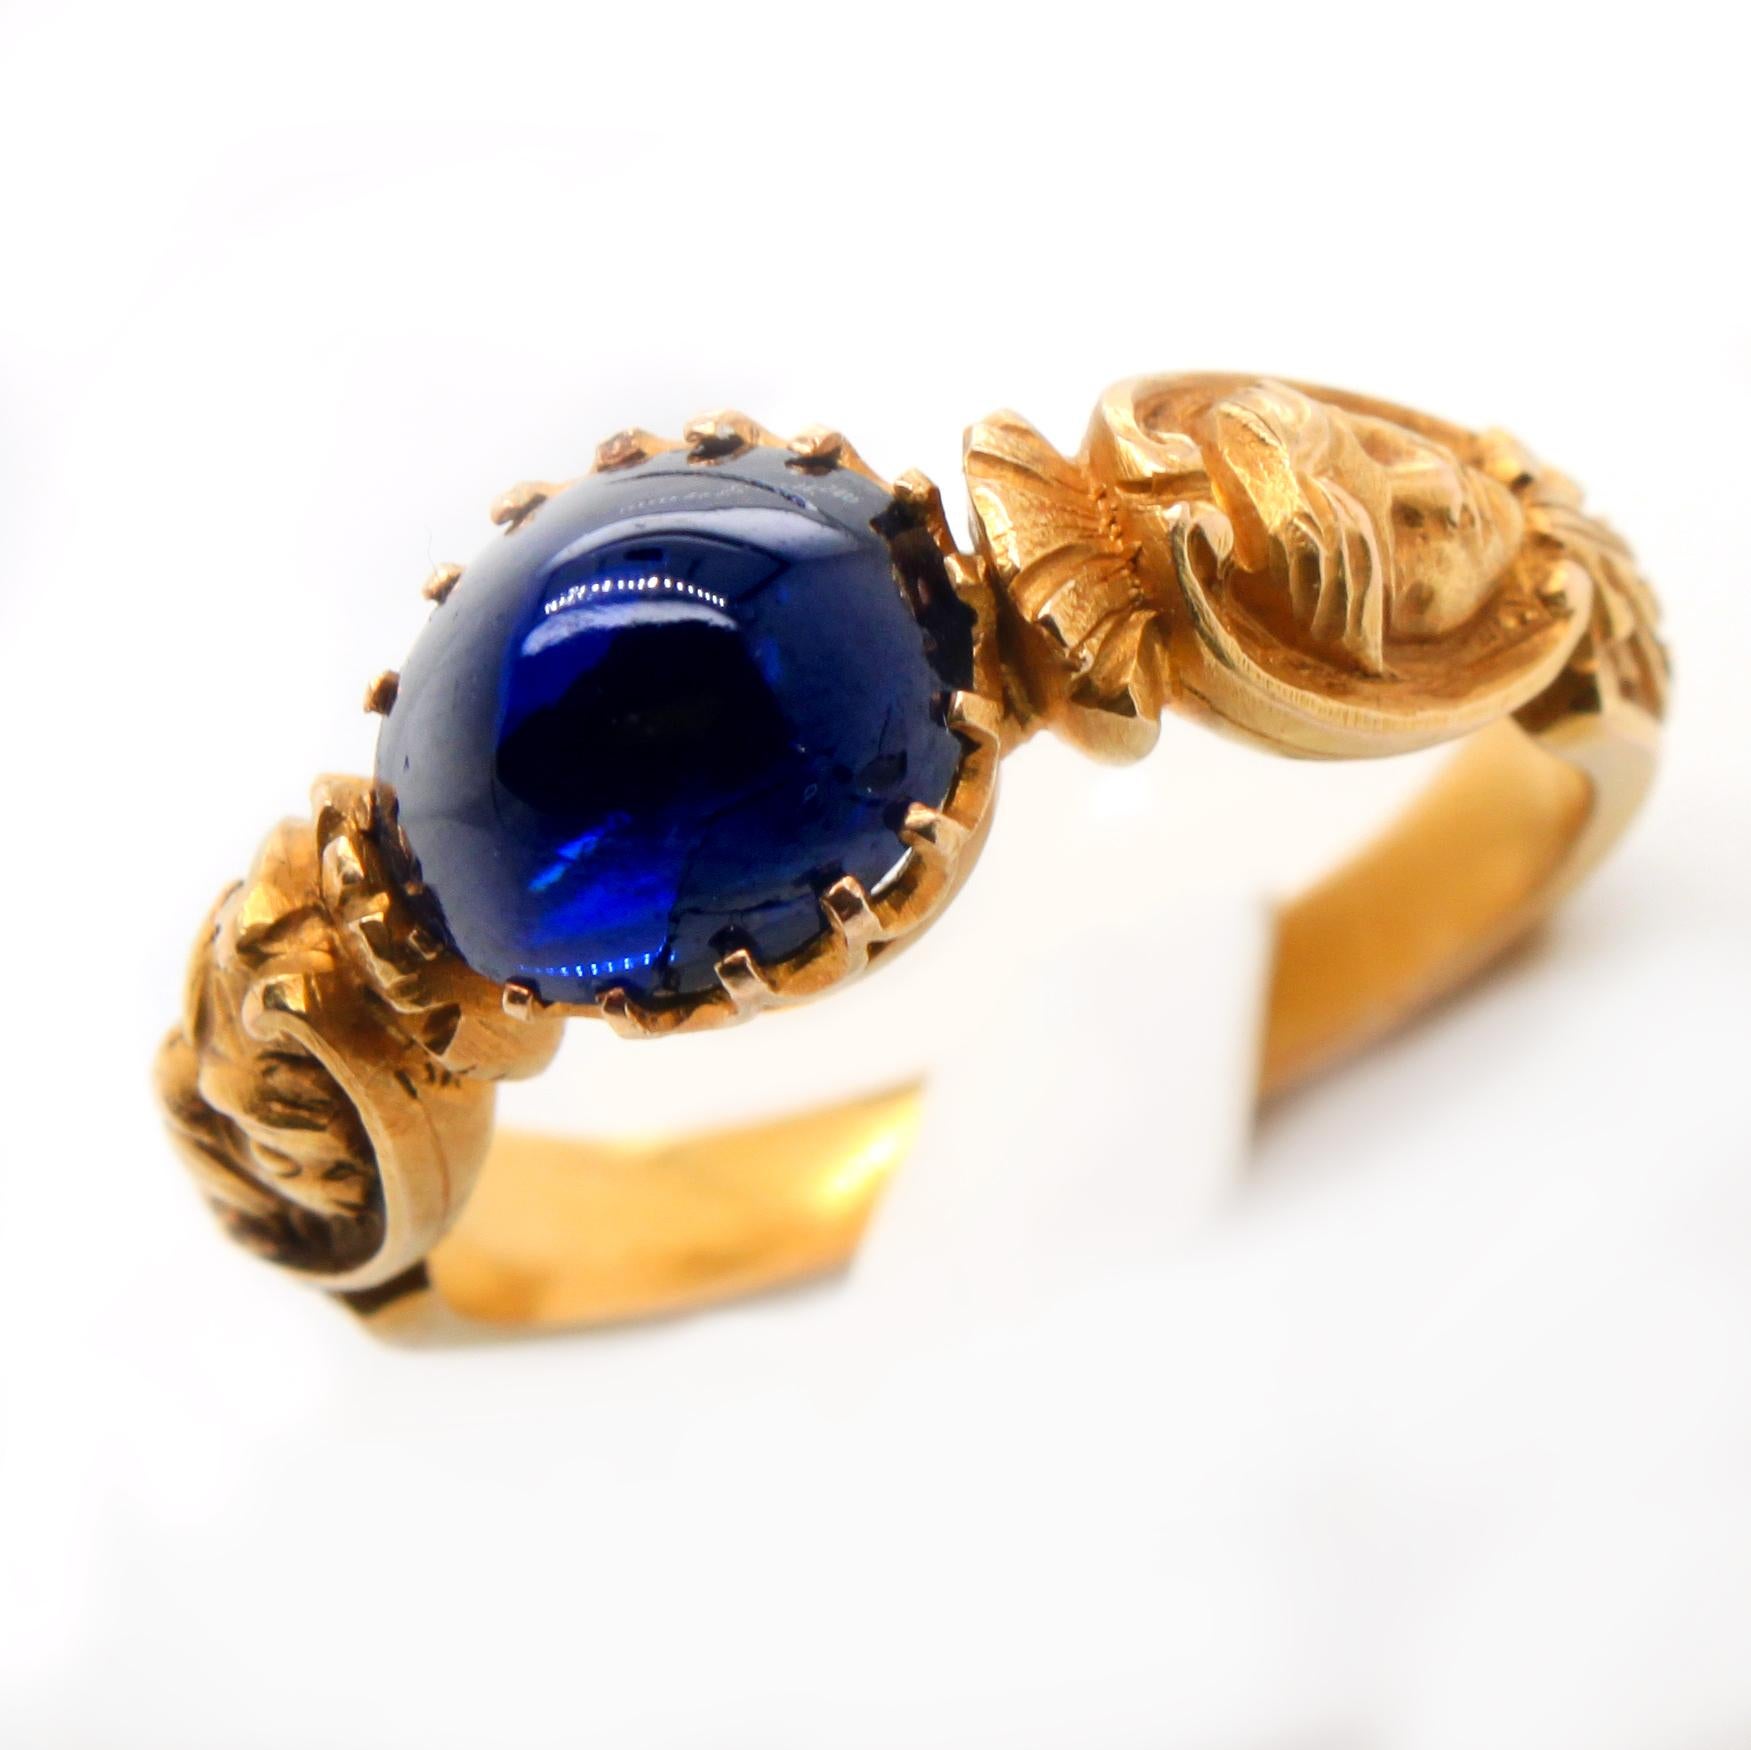 Sugarloaf Cabochon Renaissance Revival Sapphire and Gold Ring, circa 1840s